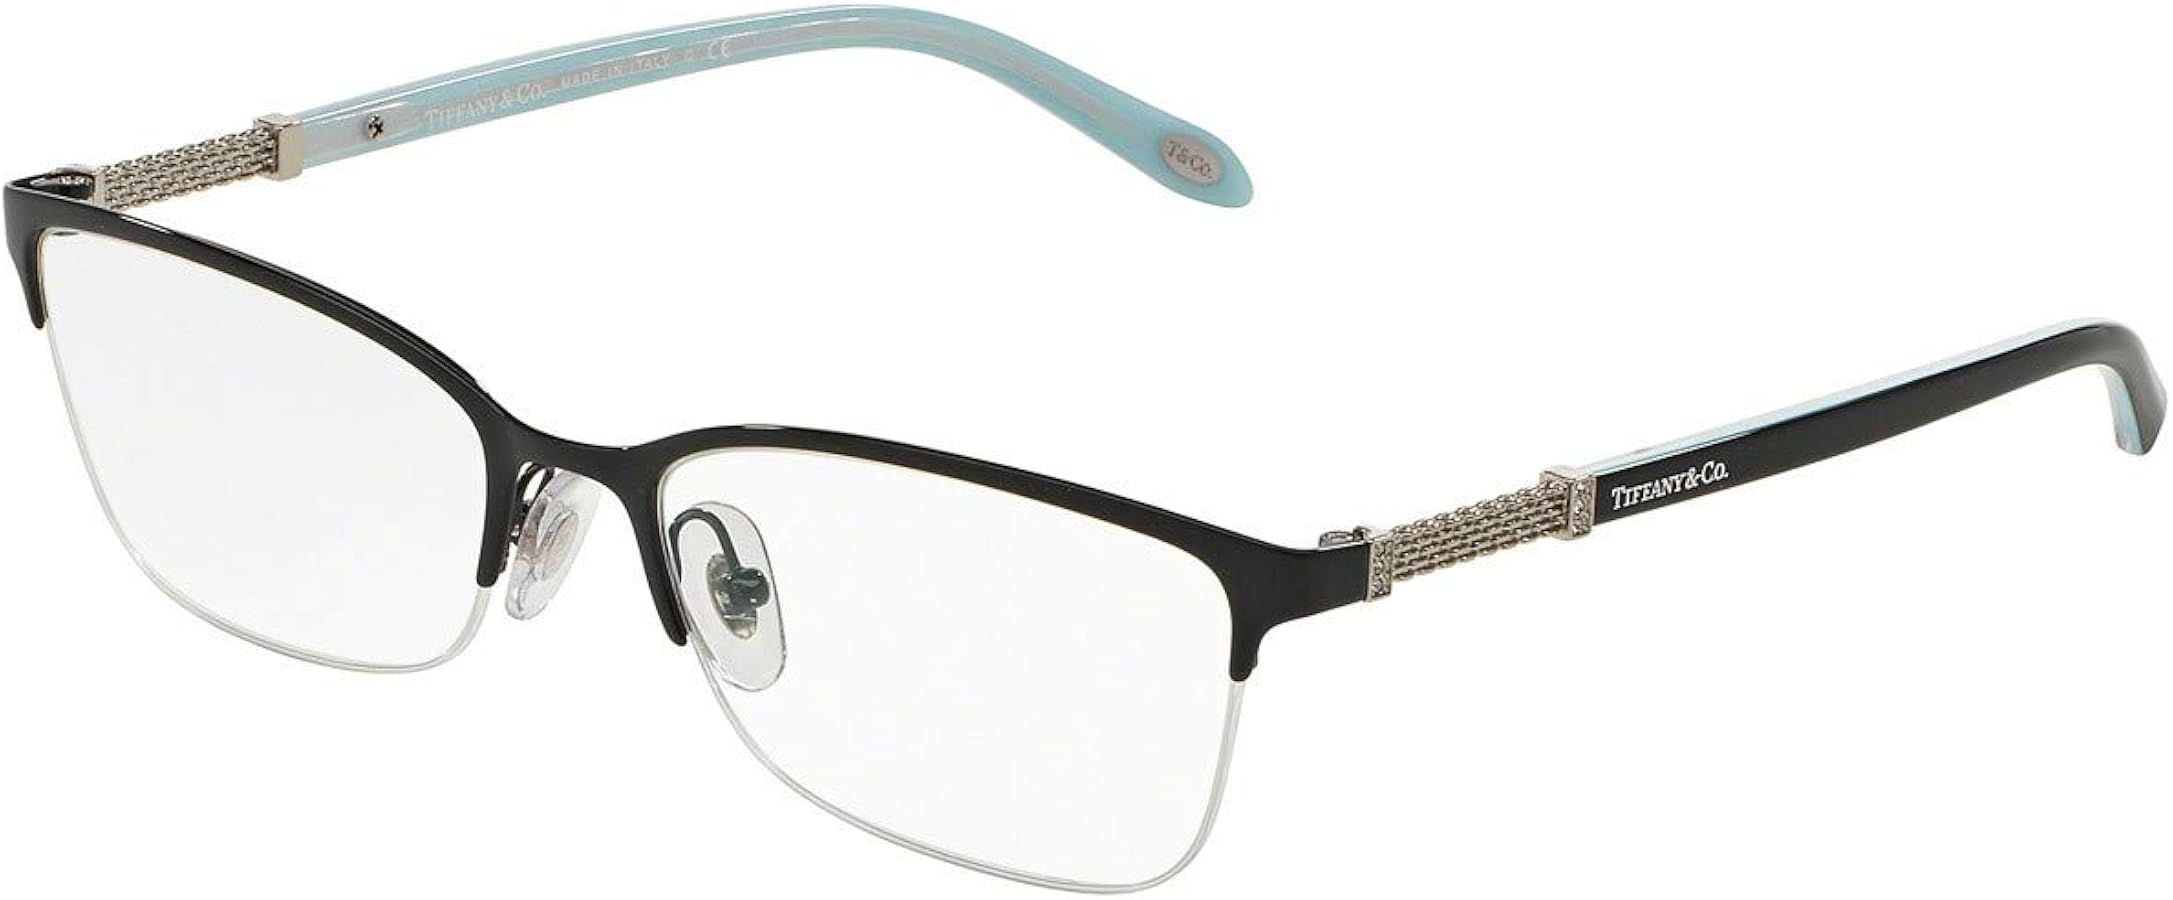 tiffany & co frames for eyeglasses